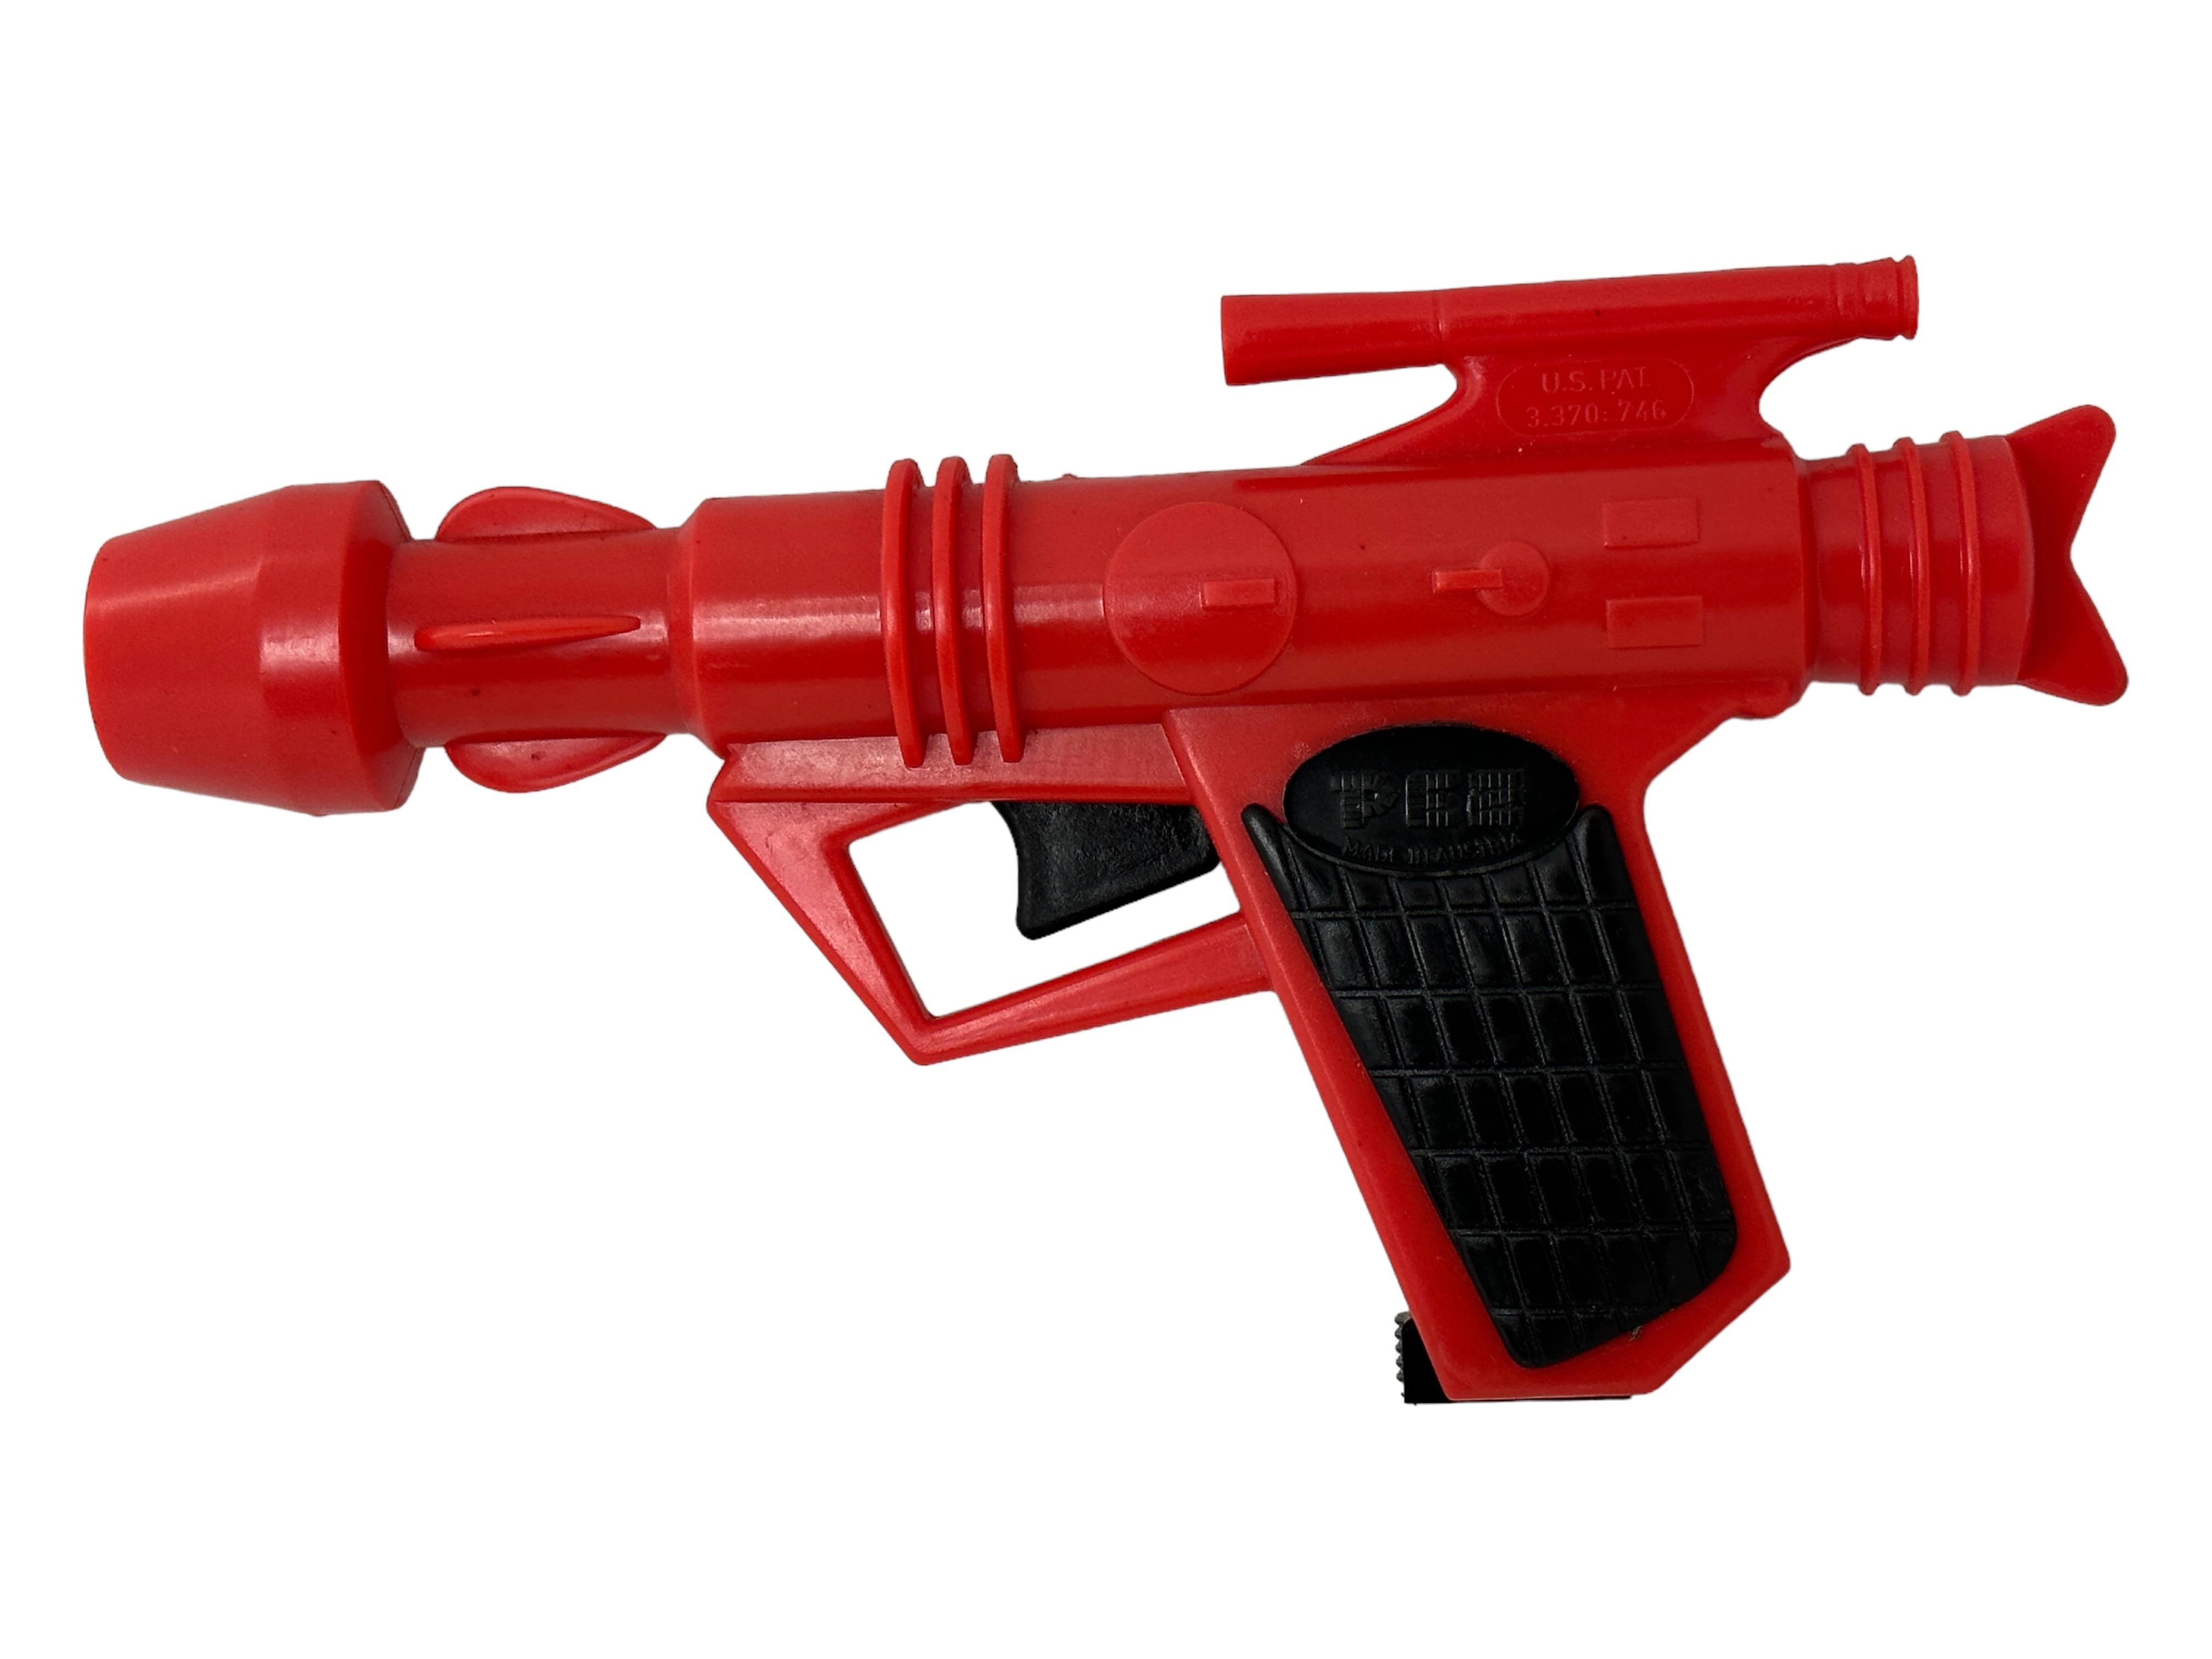 1980s Vintage Red PEZ Space Gun Candy Dispenser U. S. Pat. 3.370.746 For Sale